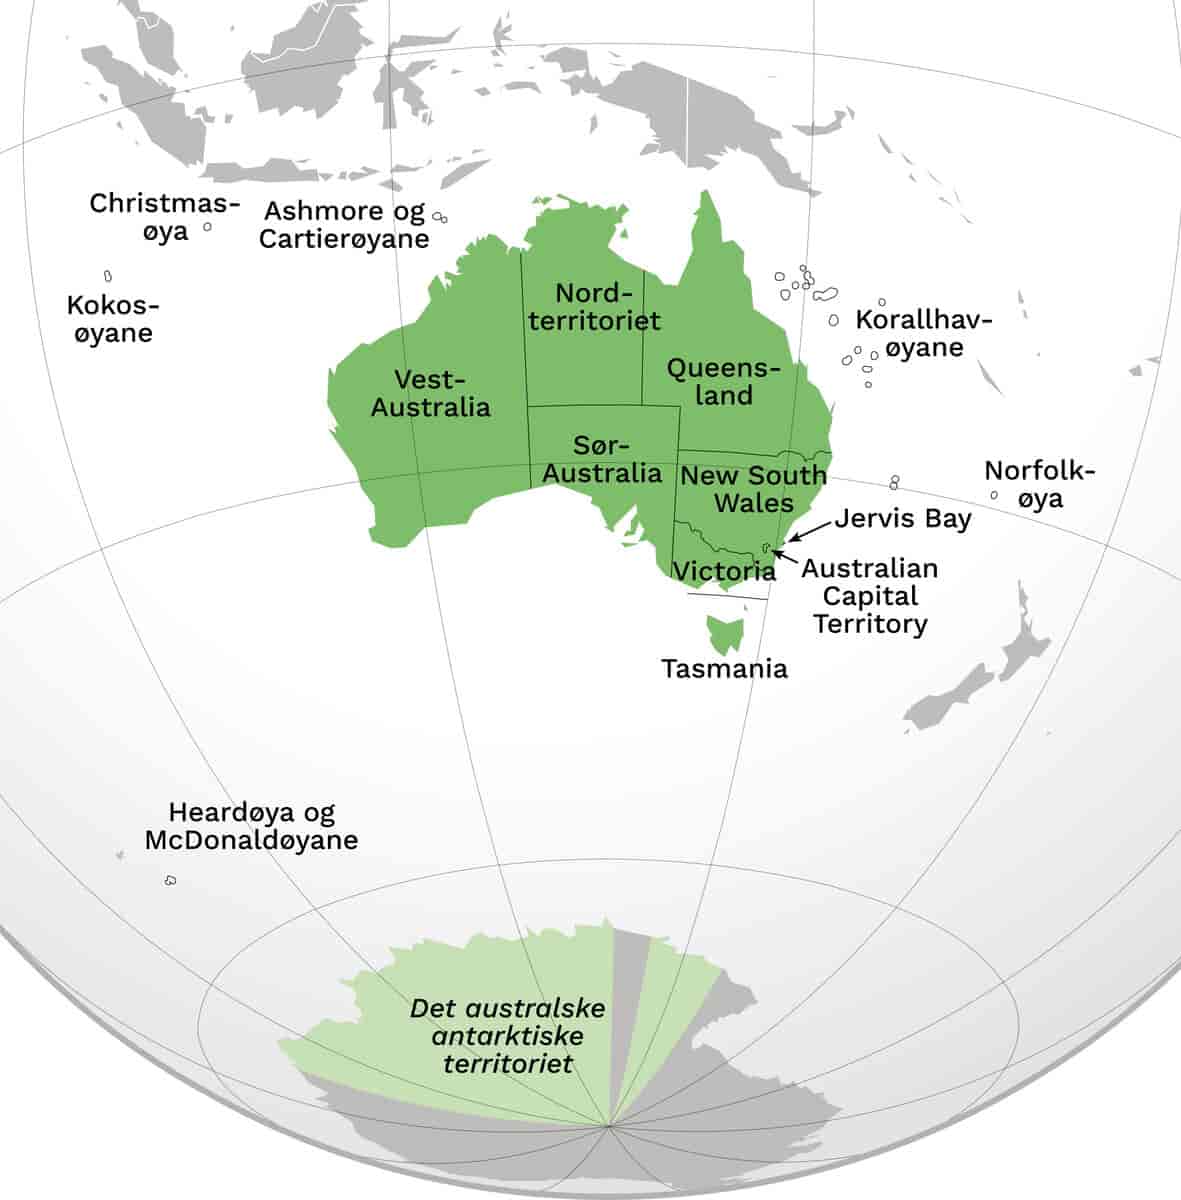 Australia med delstater, ytre og indre territorier